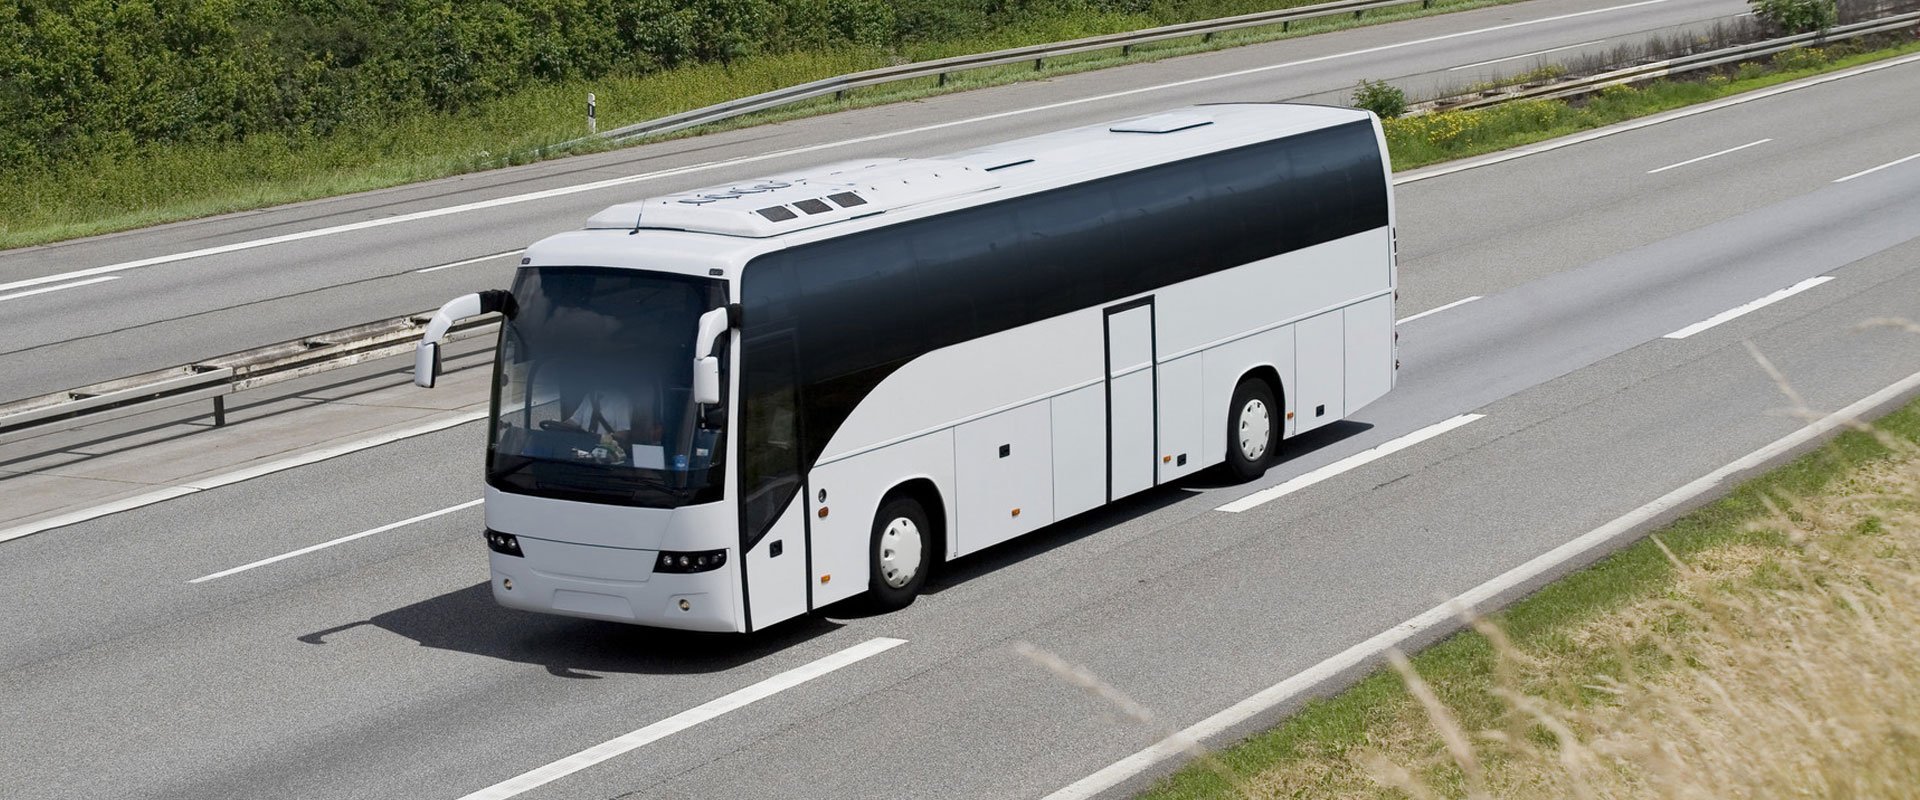 Coach tours Investravel 0203 239 4622 National Minibus & Coach